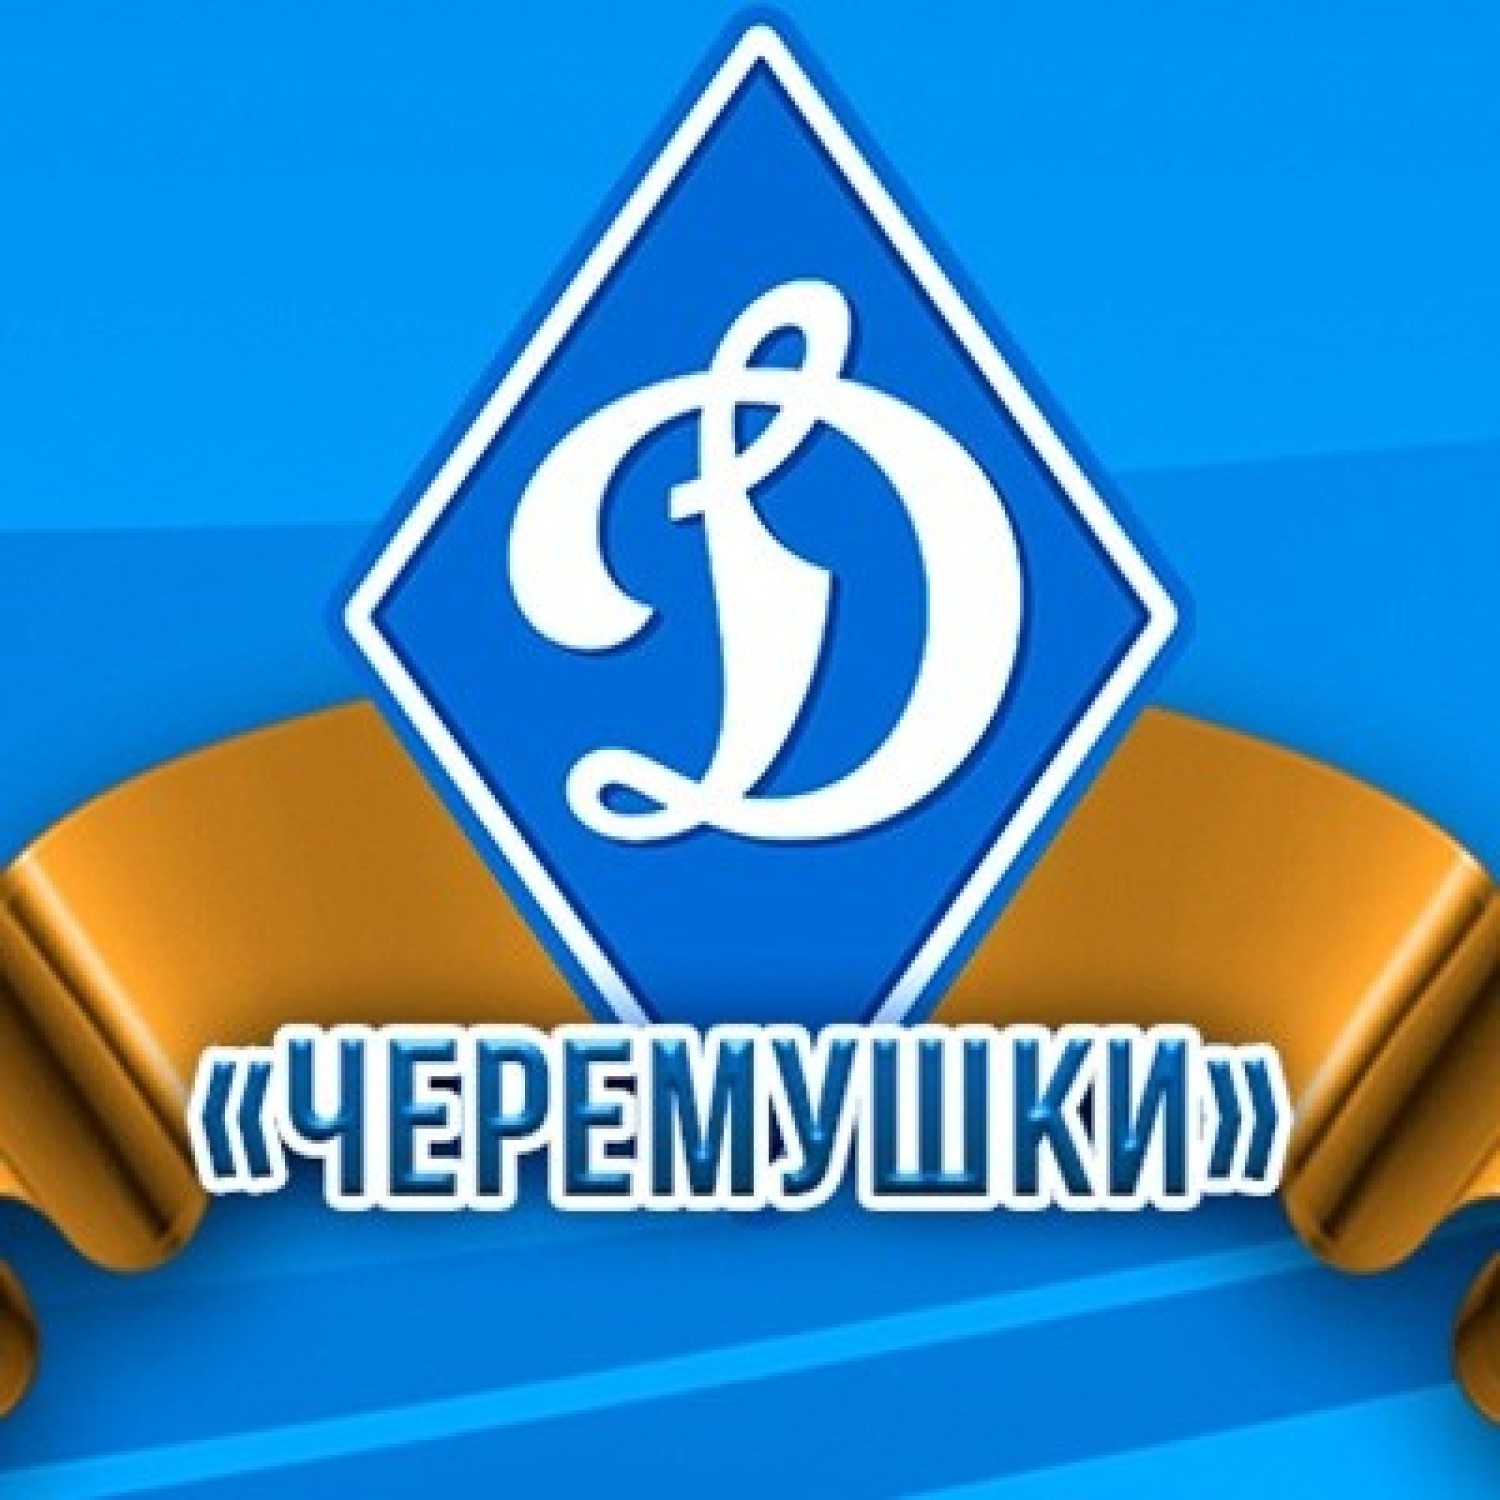 Спортивно-танцевальный клуб "Динамо"